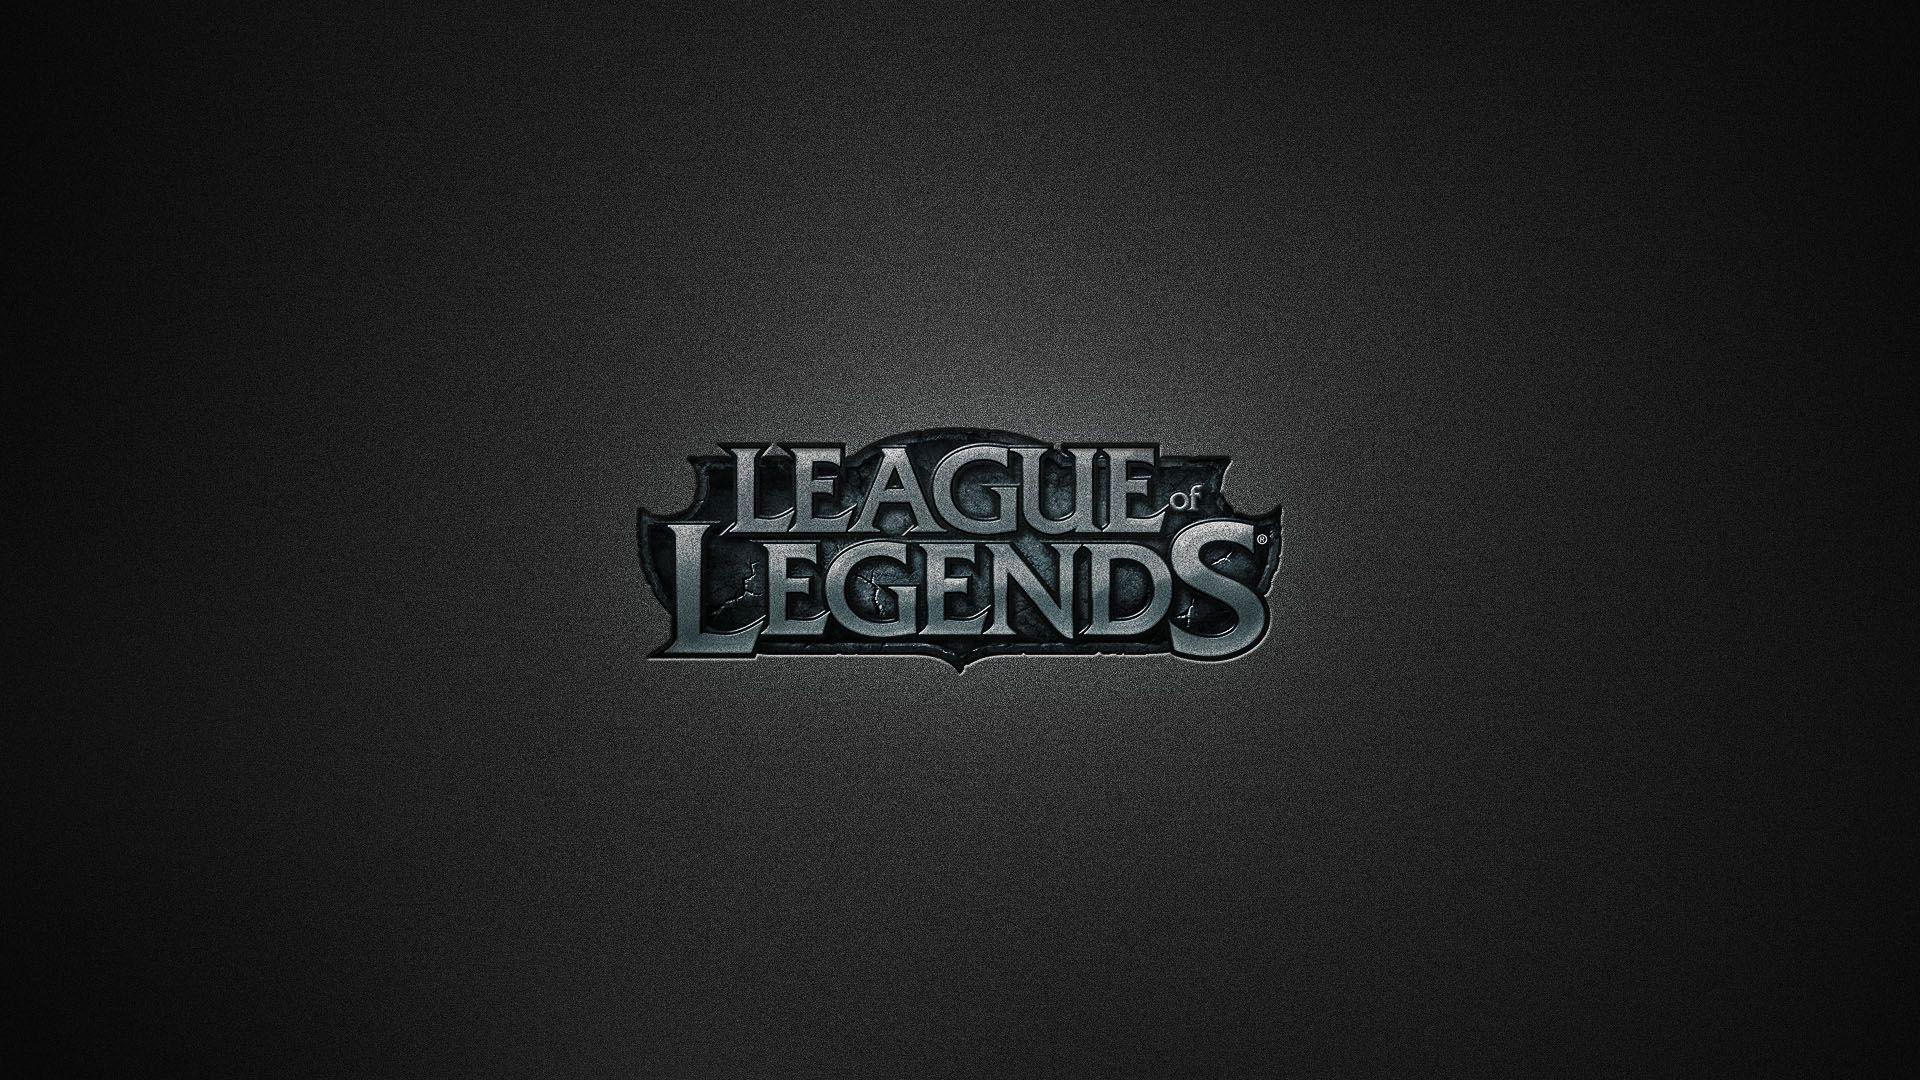 Mobile Legends Logo Wallpapers - Wallpaper Cave